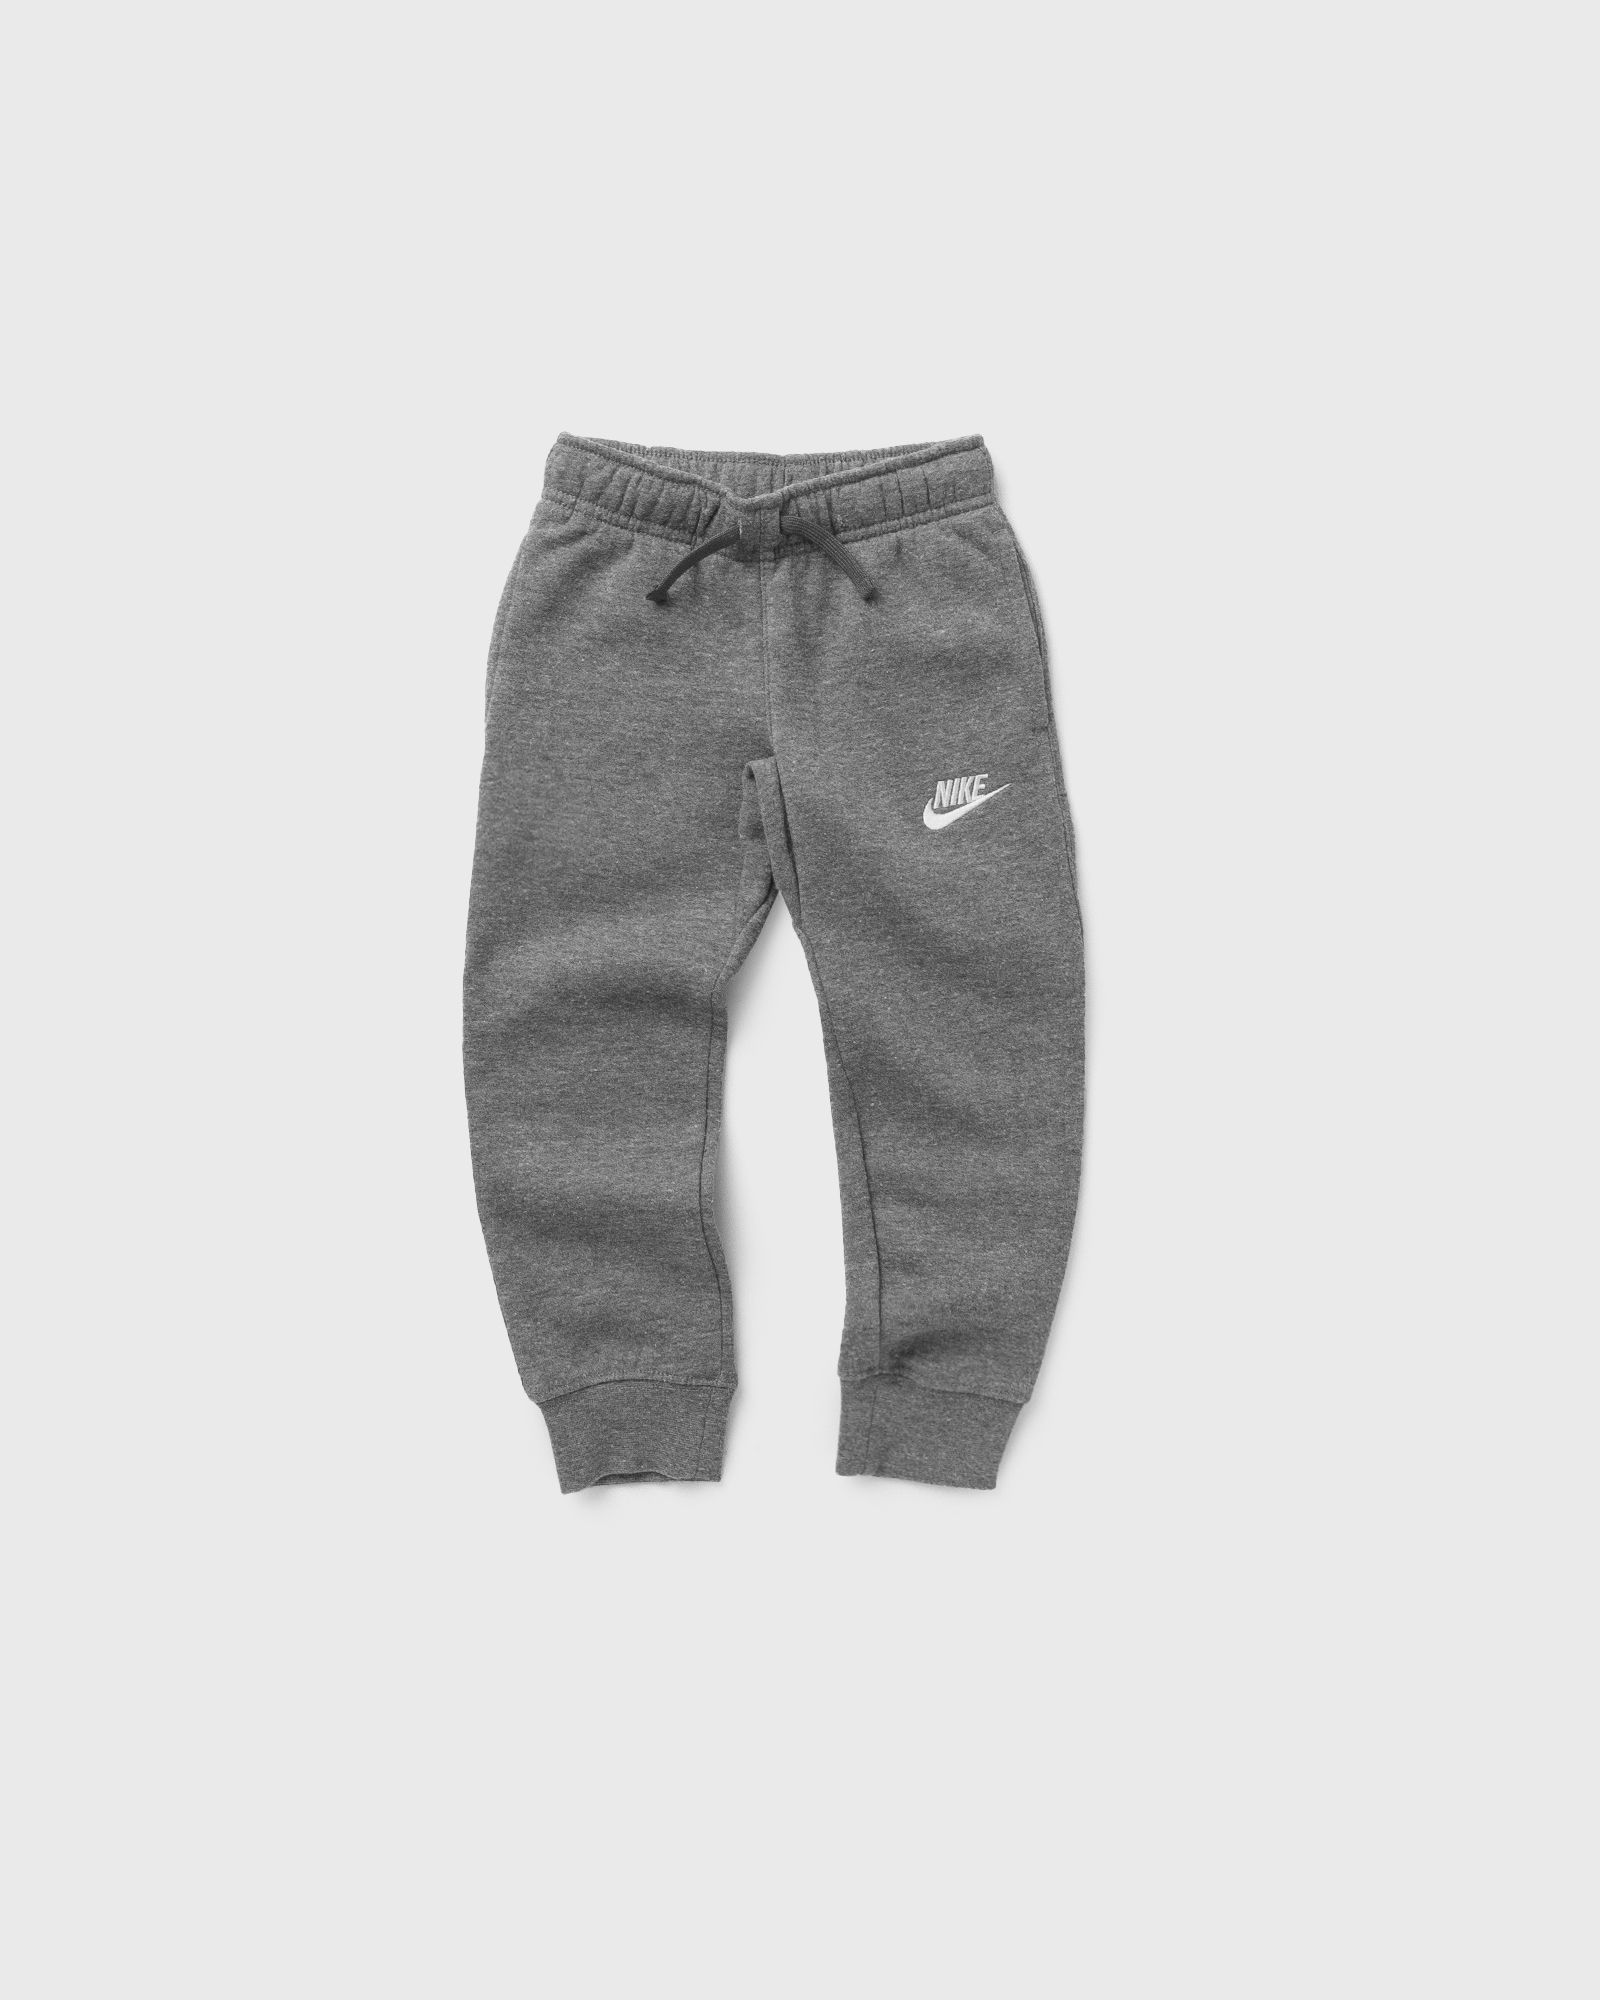 Nike - club fleece rib cuff pant  pants grey in größe:age 6-8 | eu 116-128